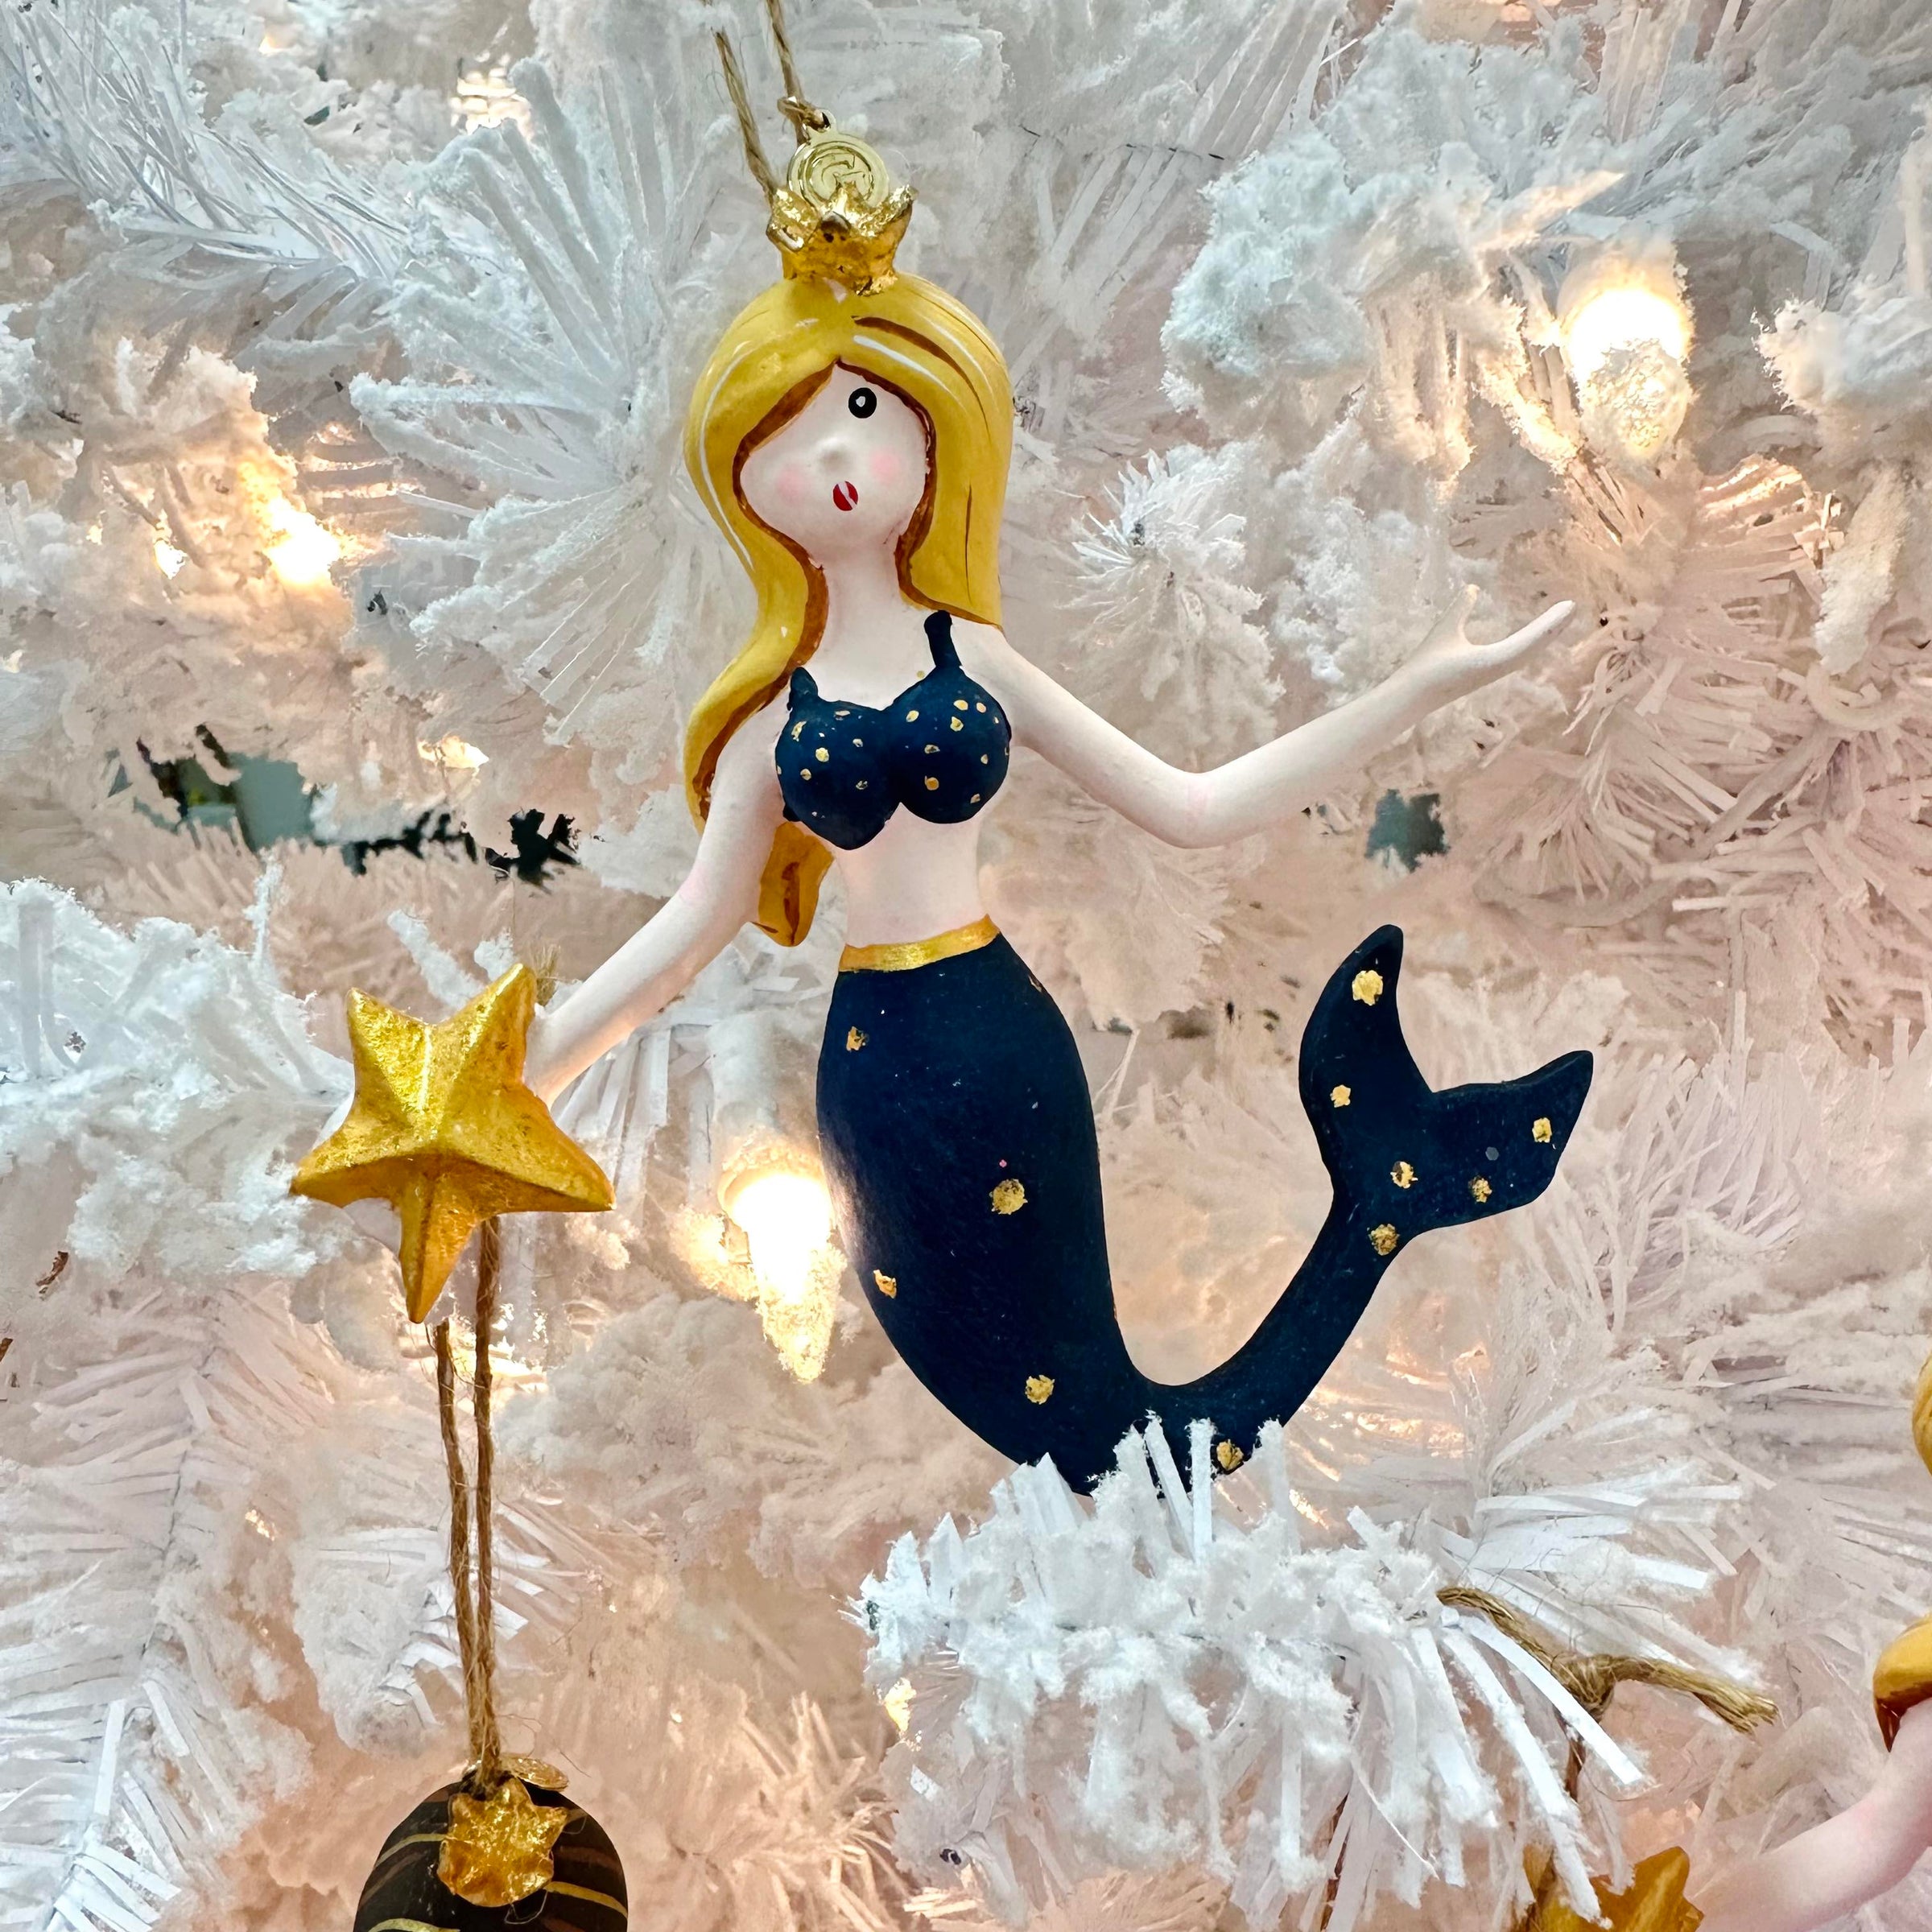 Assorted Mermaids Holding Starfish Ornaments